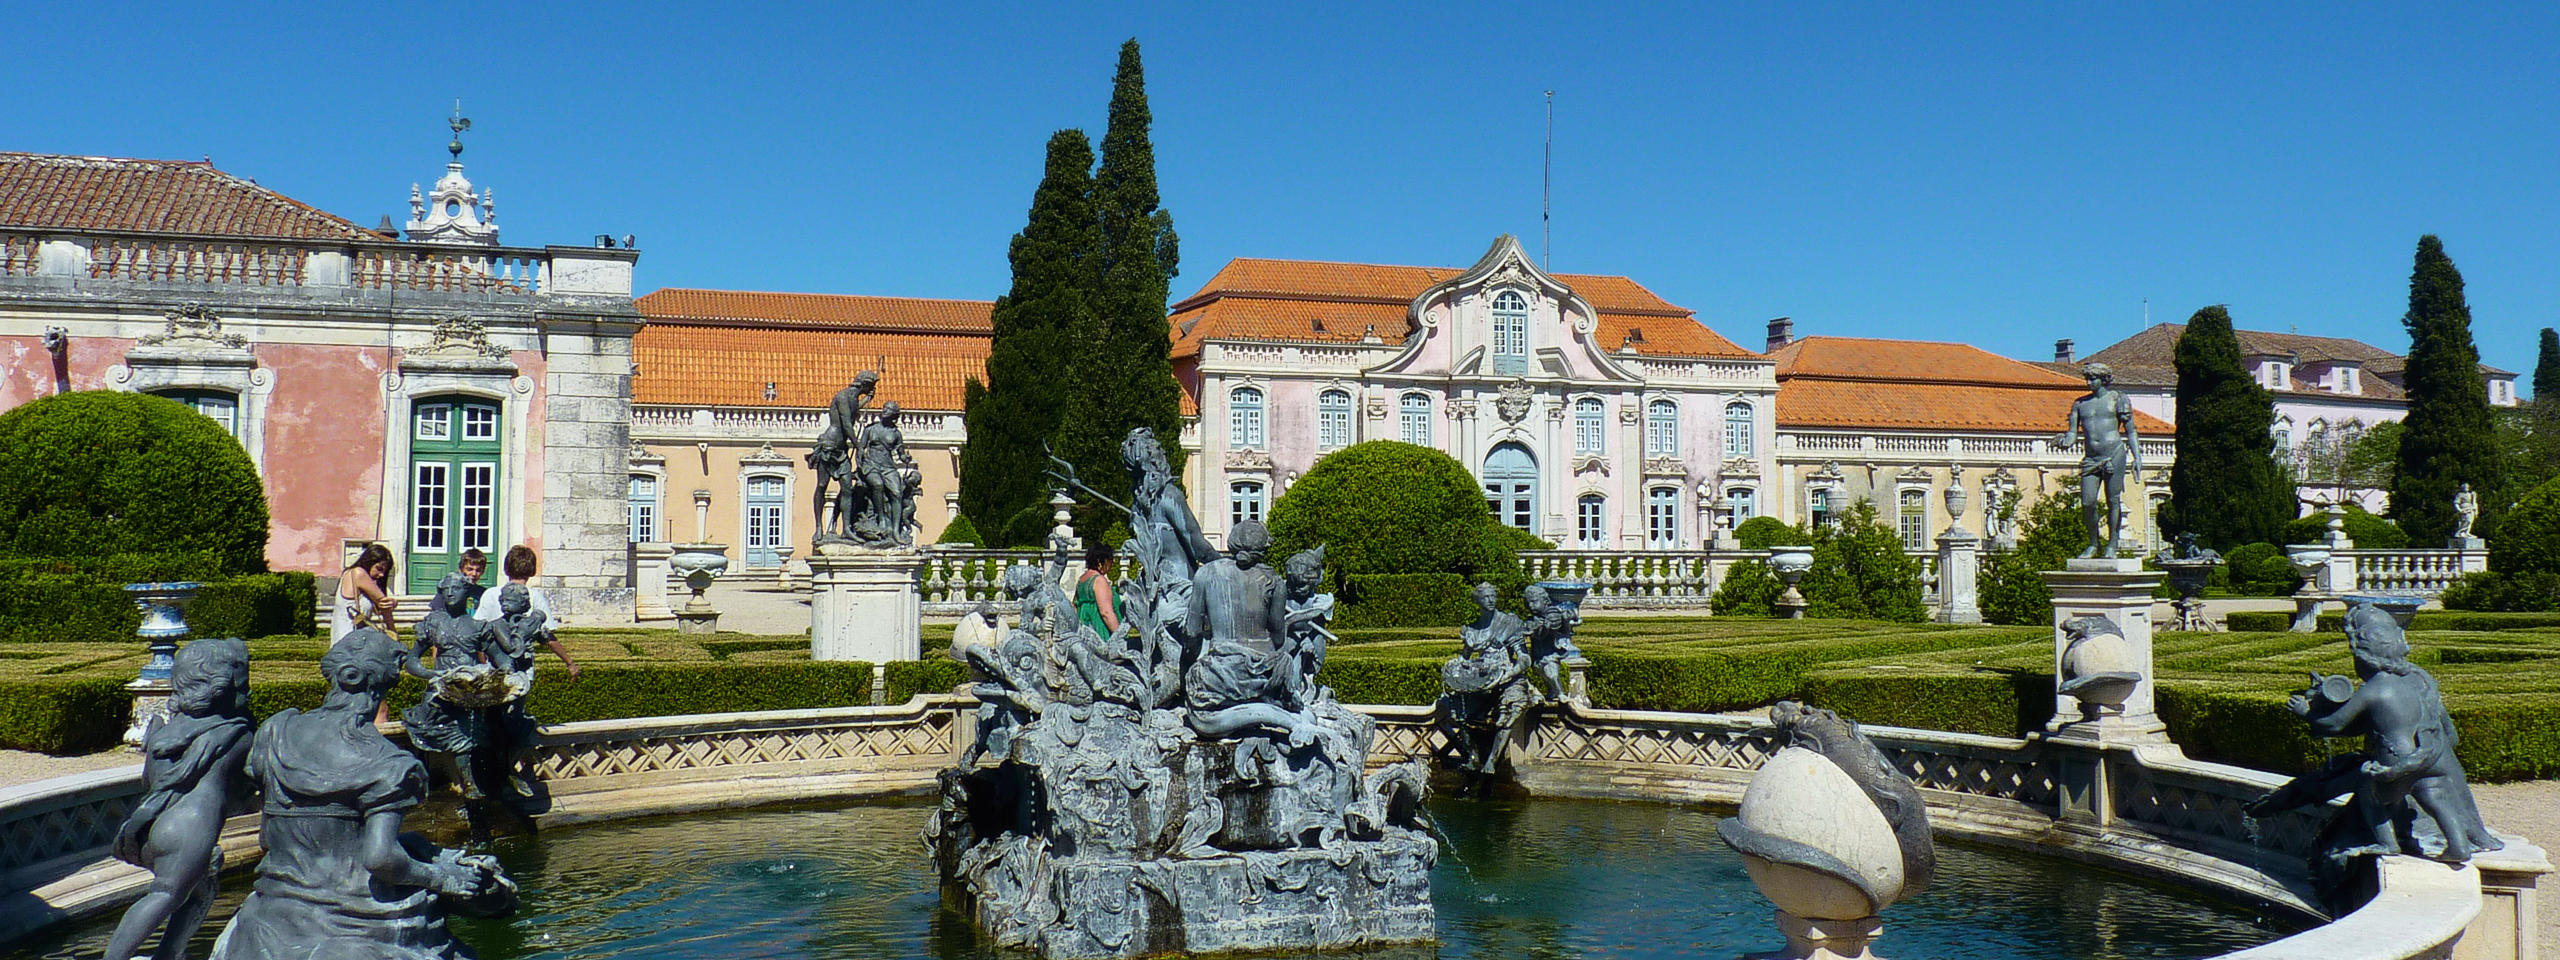 Palácio de Queluz chafariz e jardim